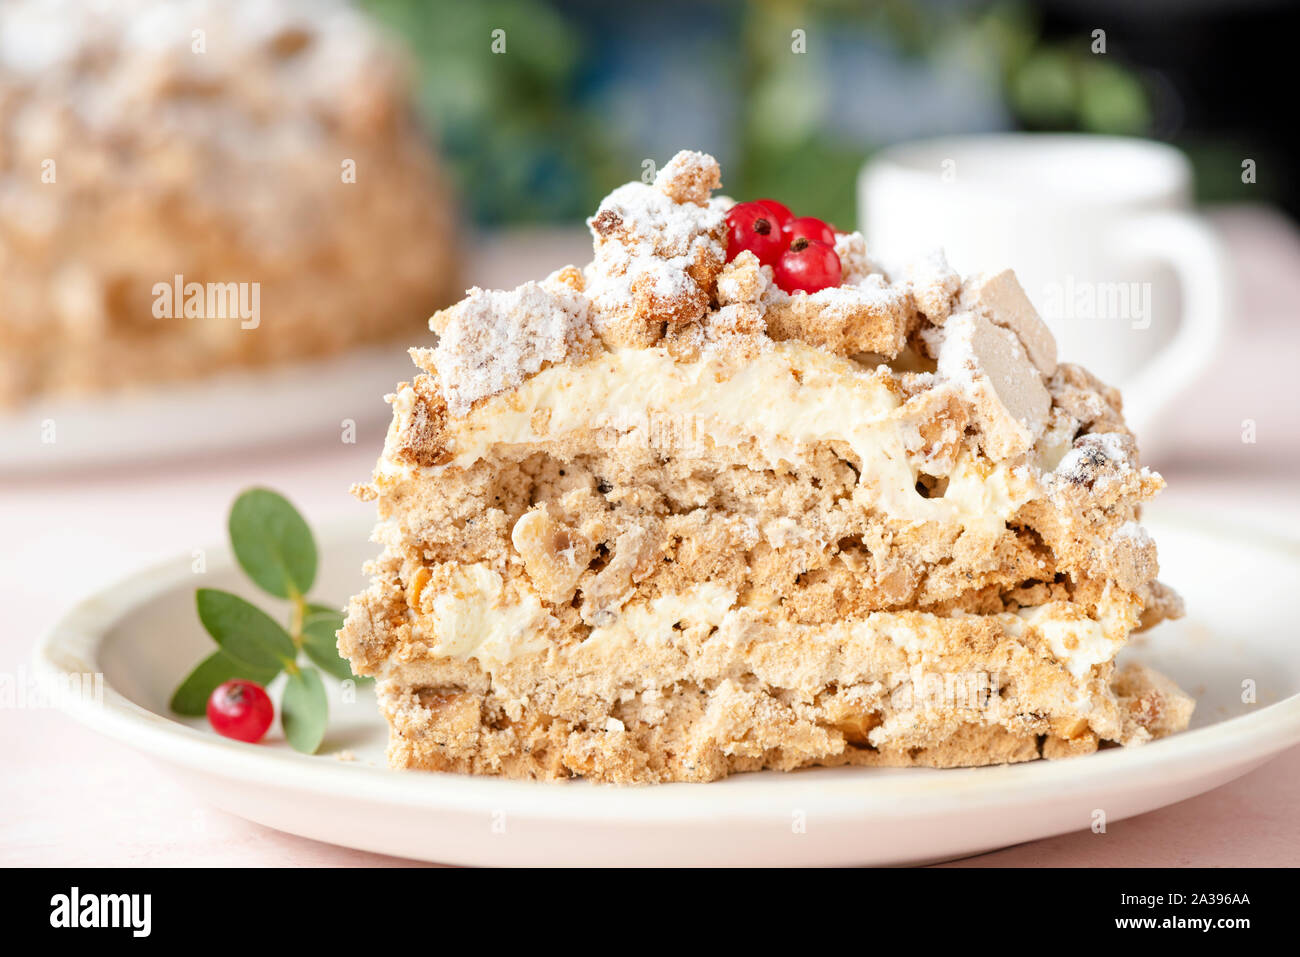 1216 Kyiv Cake Images Stock Photos  Vectors  Shutterstock